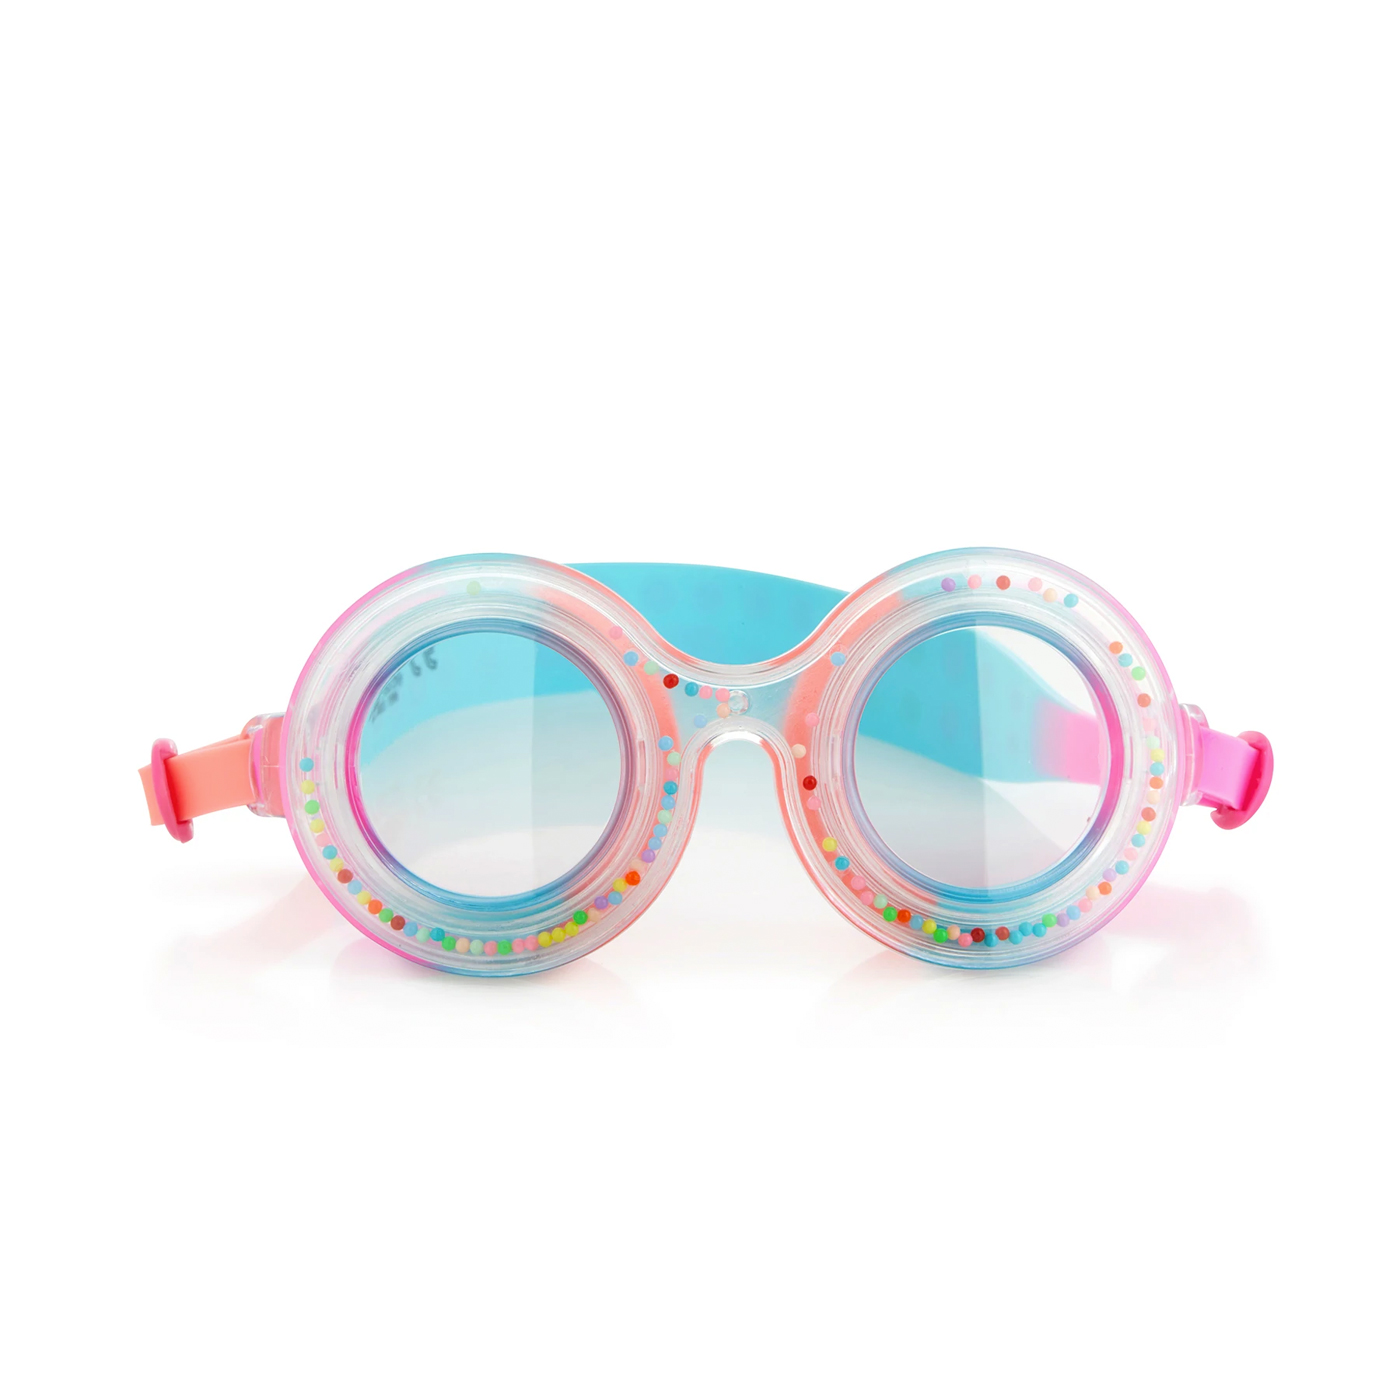  Bling2o Double Bubble Licious Deniz Gözlüğü  | Yummy Gummy